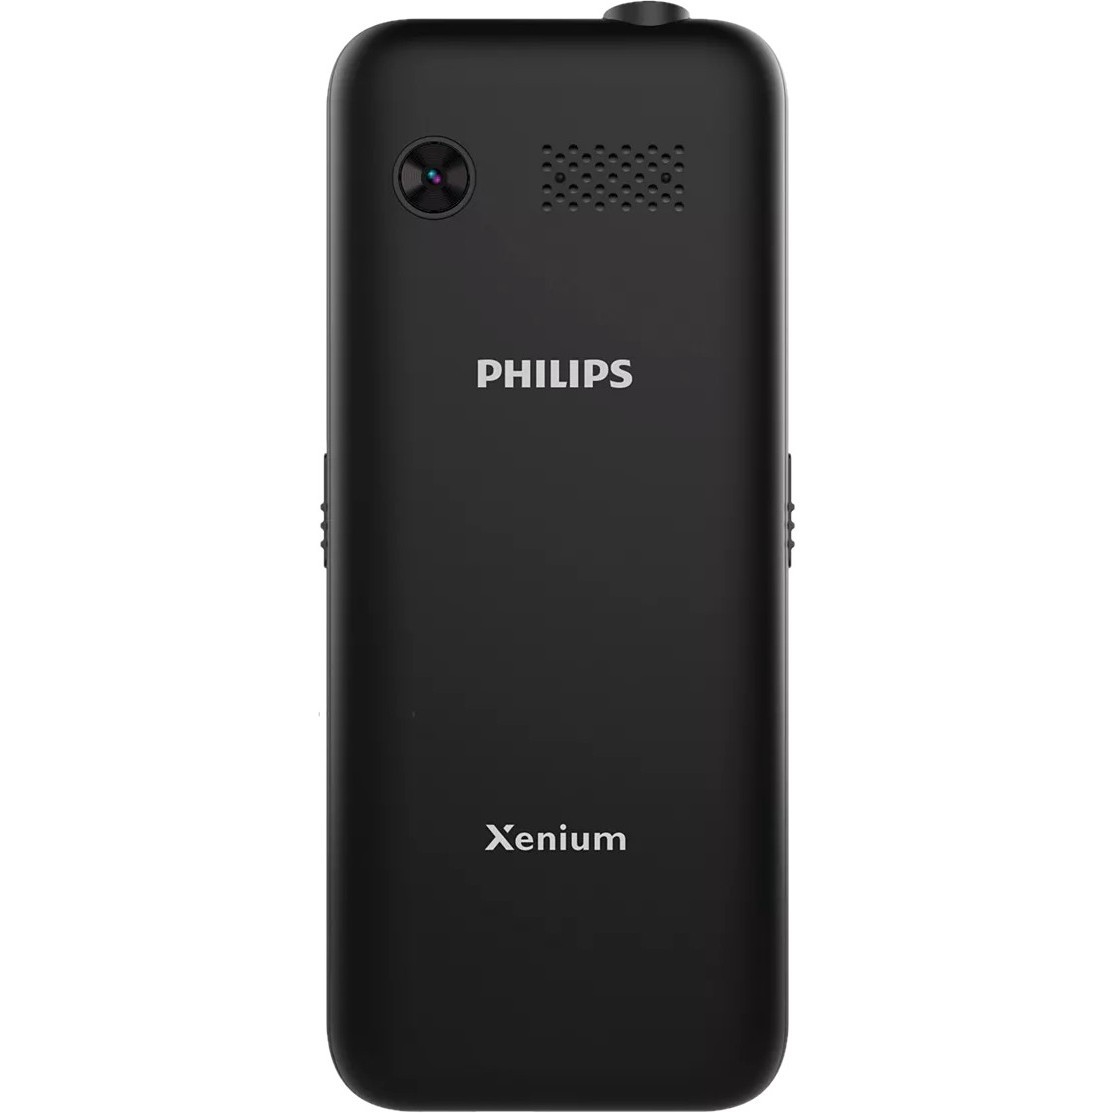 Xenium e185 black. Philips Xenium e116. Philips Xenium e2101 Dual SIM черный. E526. Philips Xenium e218 чехол купить.